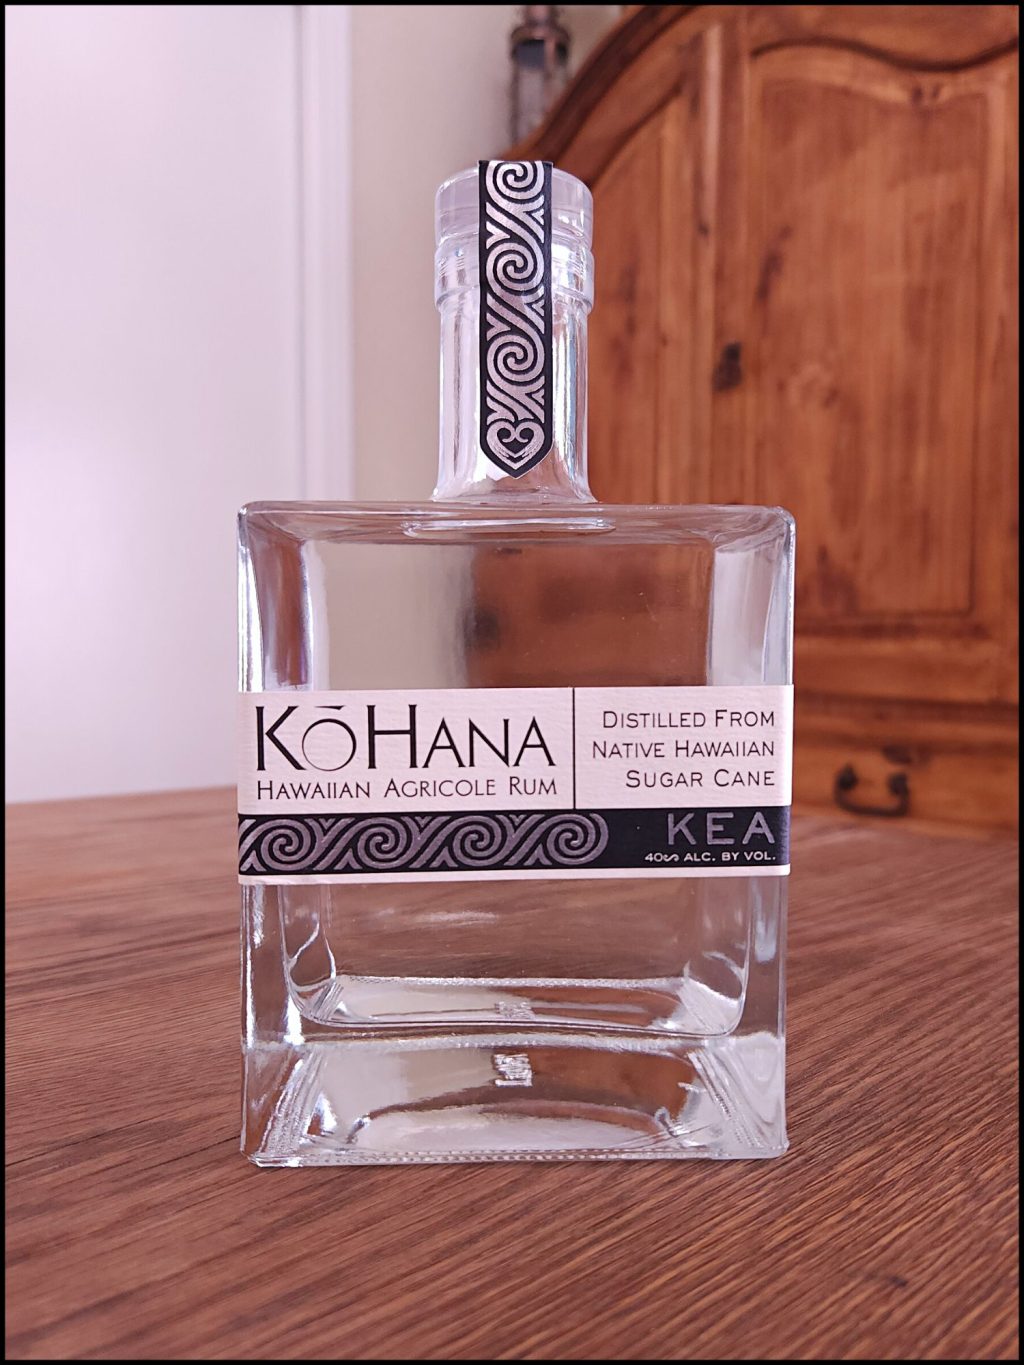 Bottle of Ko Hana Hawaiian Agricole Rum sitting on a wooden table